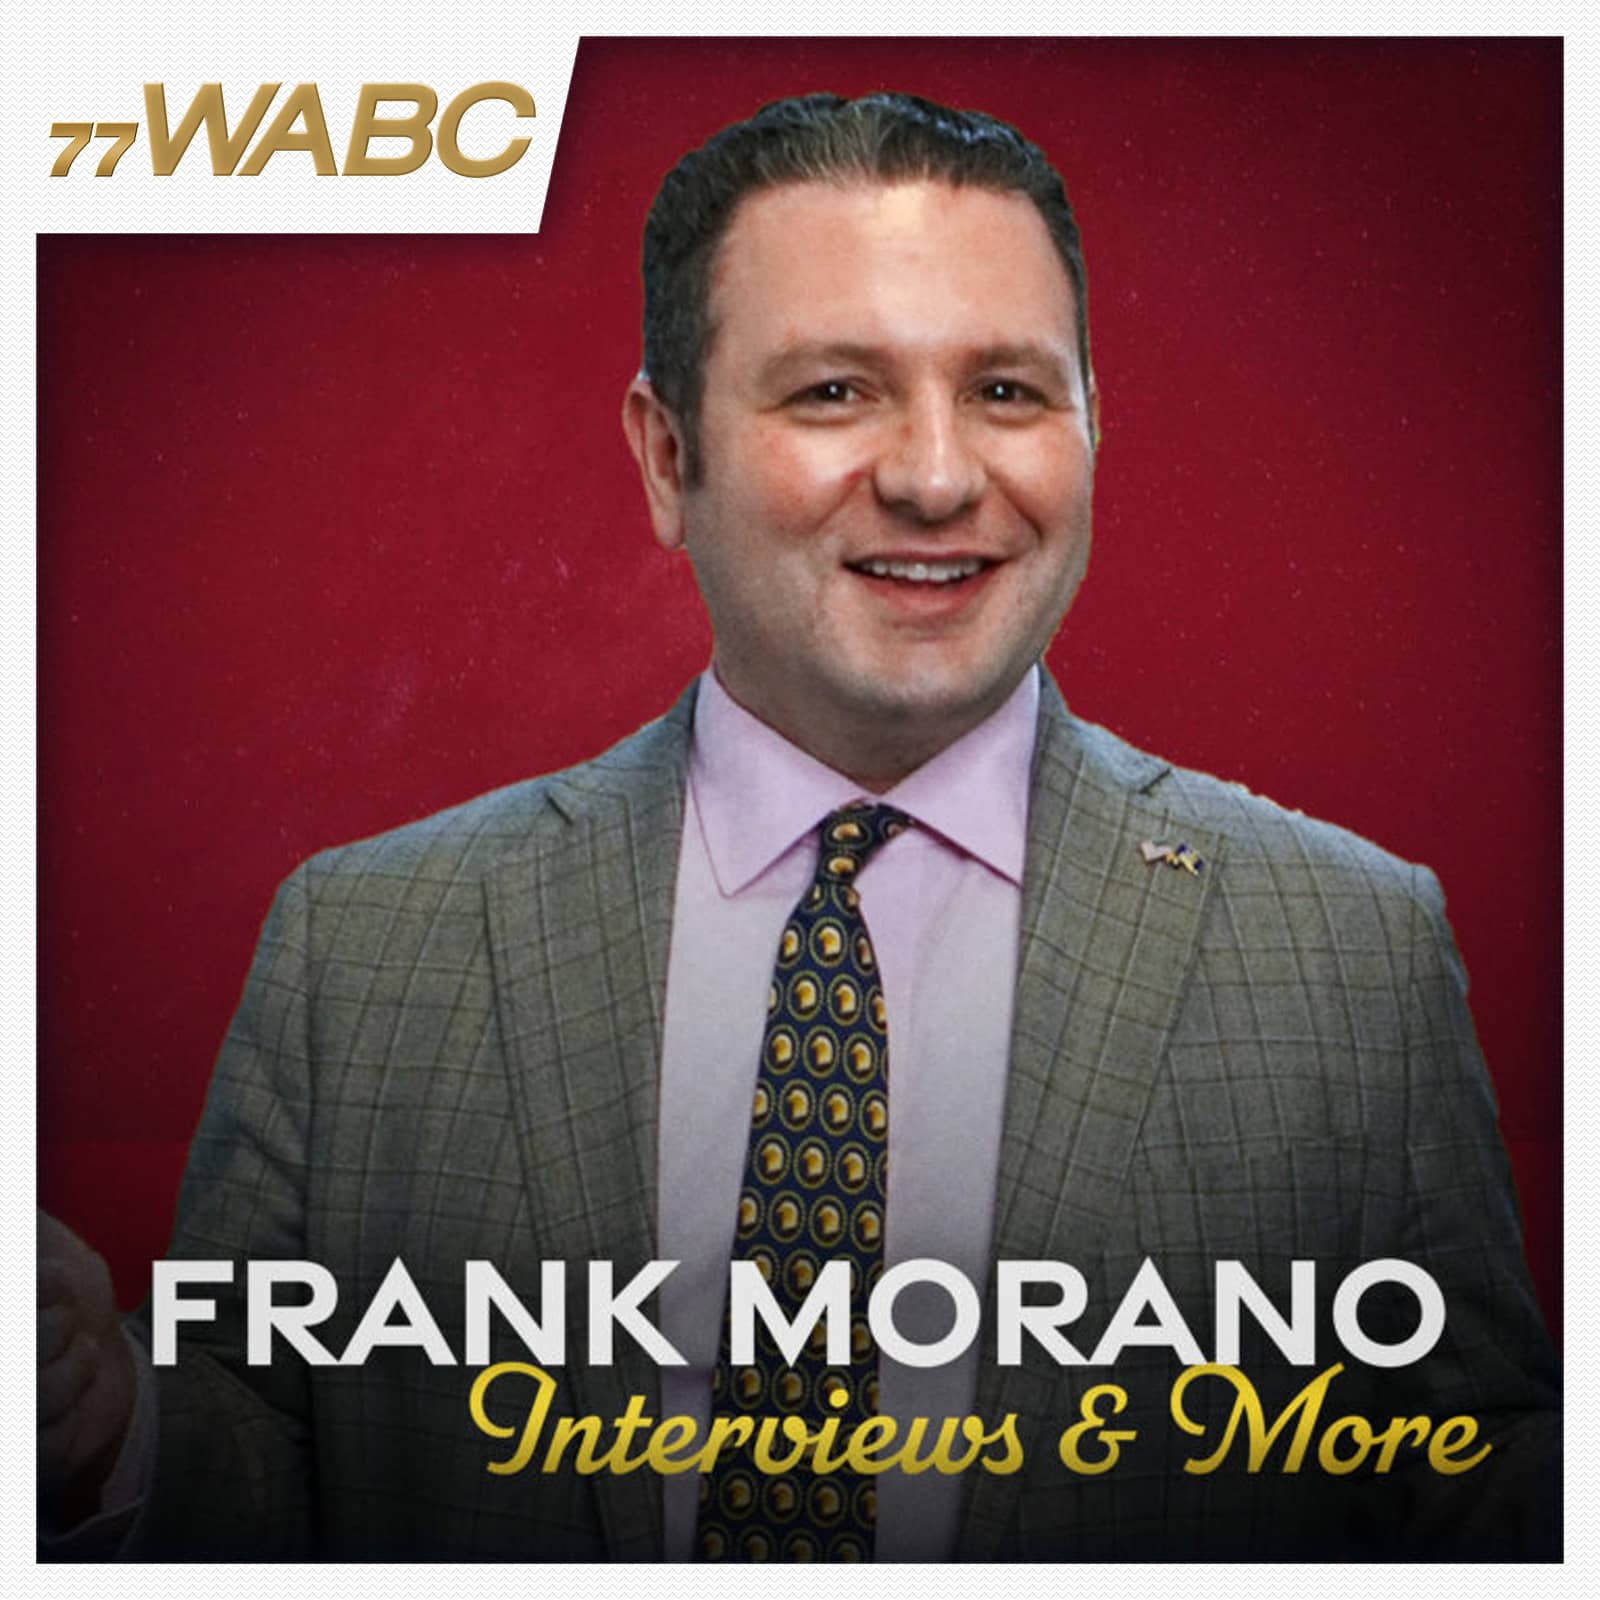 frank-morano-interviews-and-more-podcast-new-logo-325